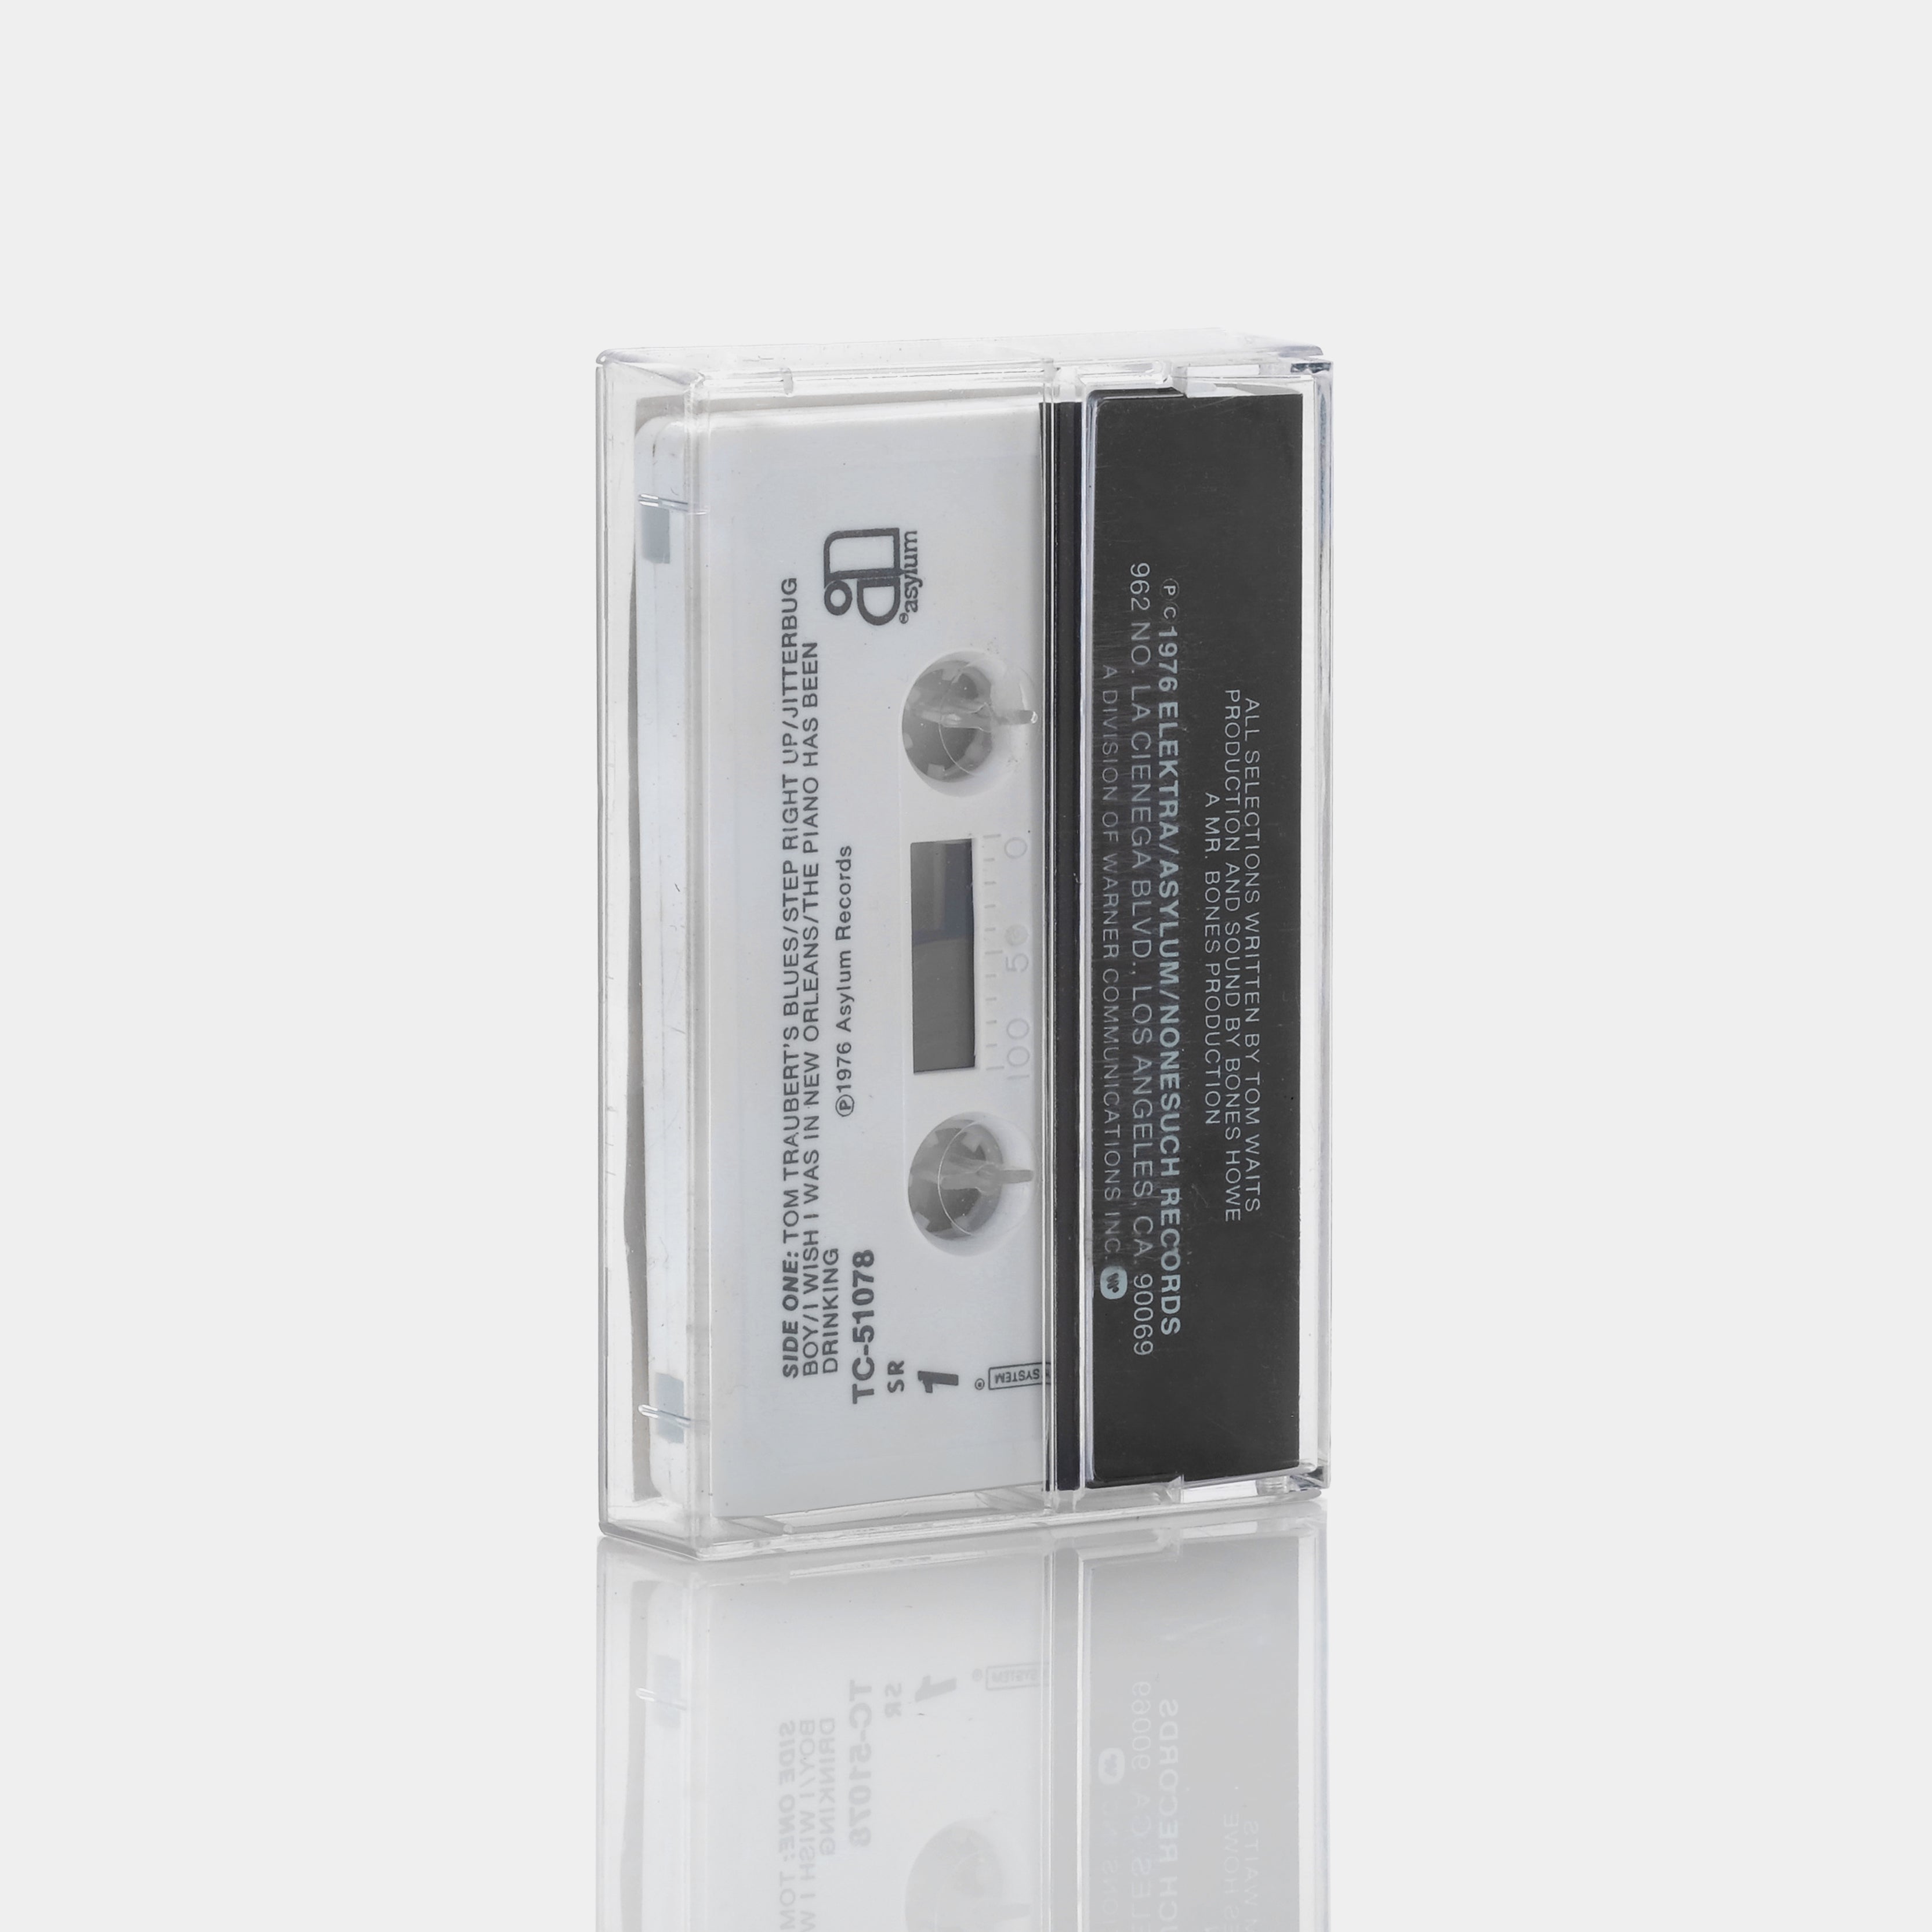 Tom Waits - Small Change Cassette Tape